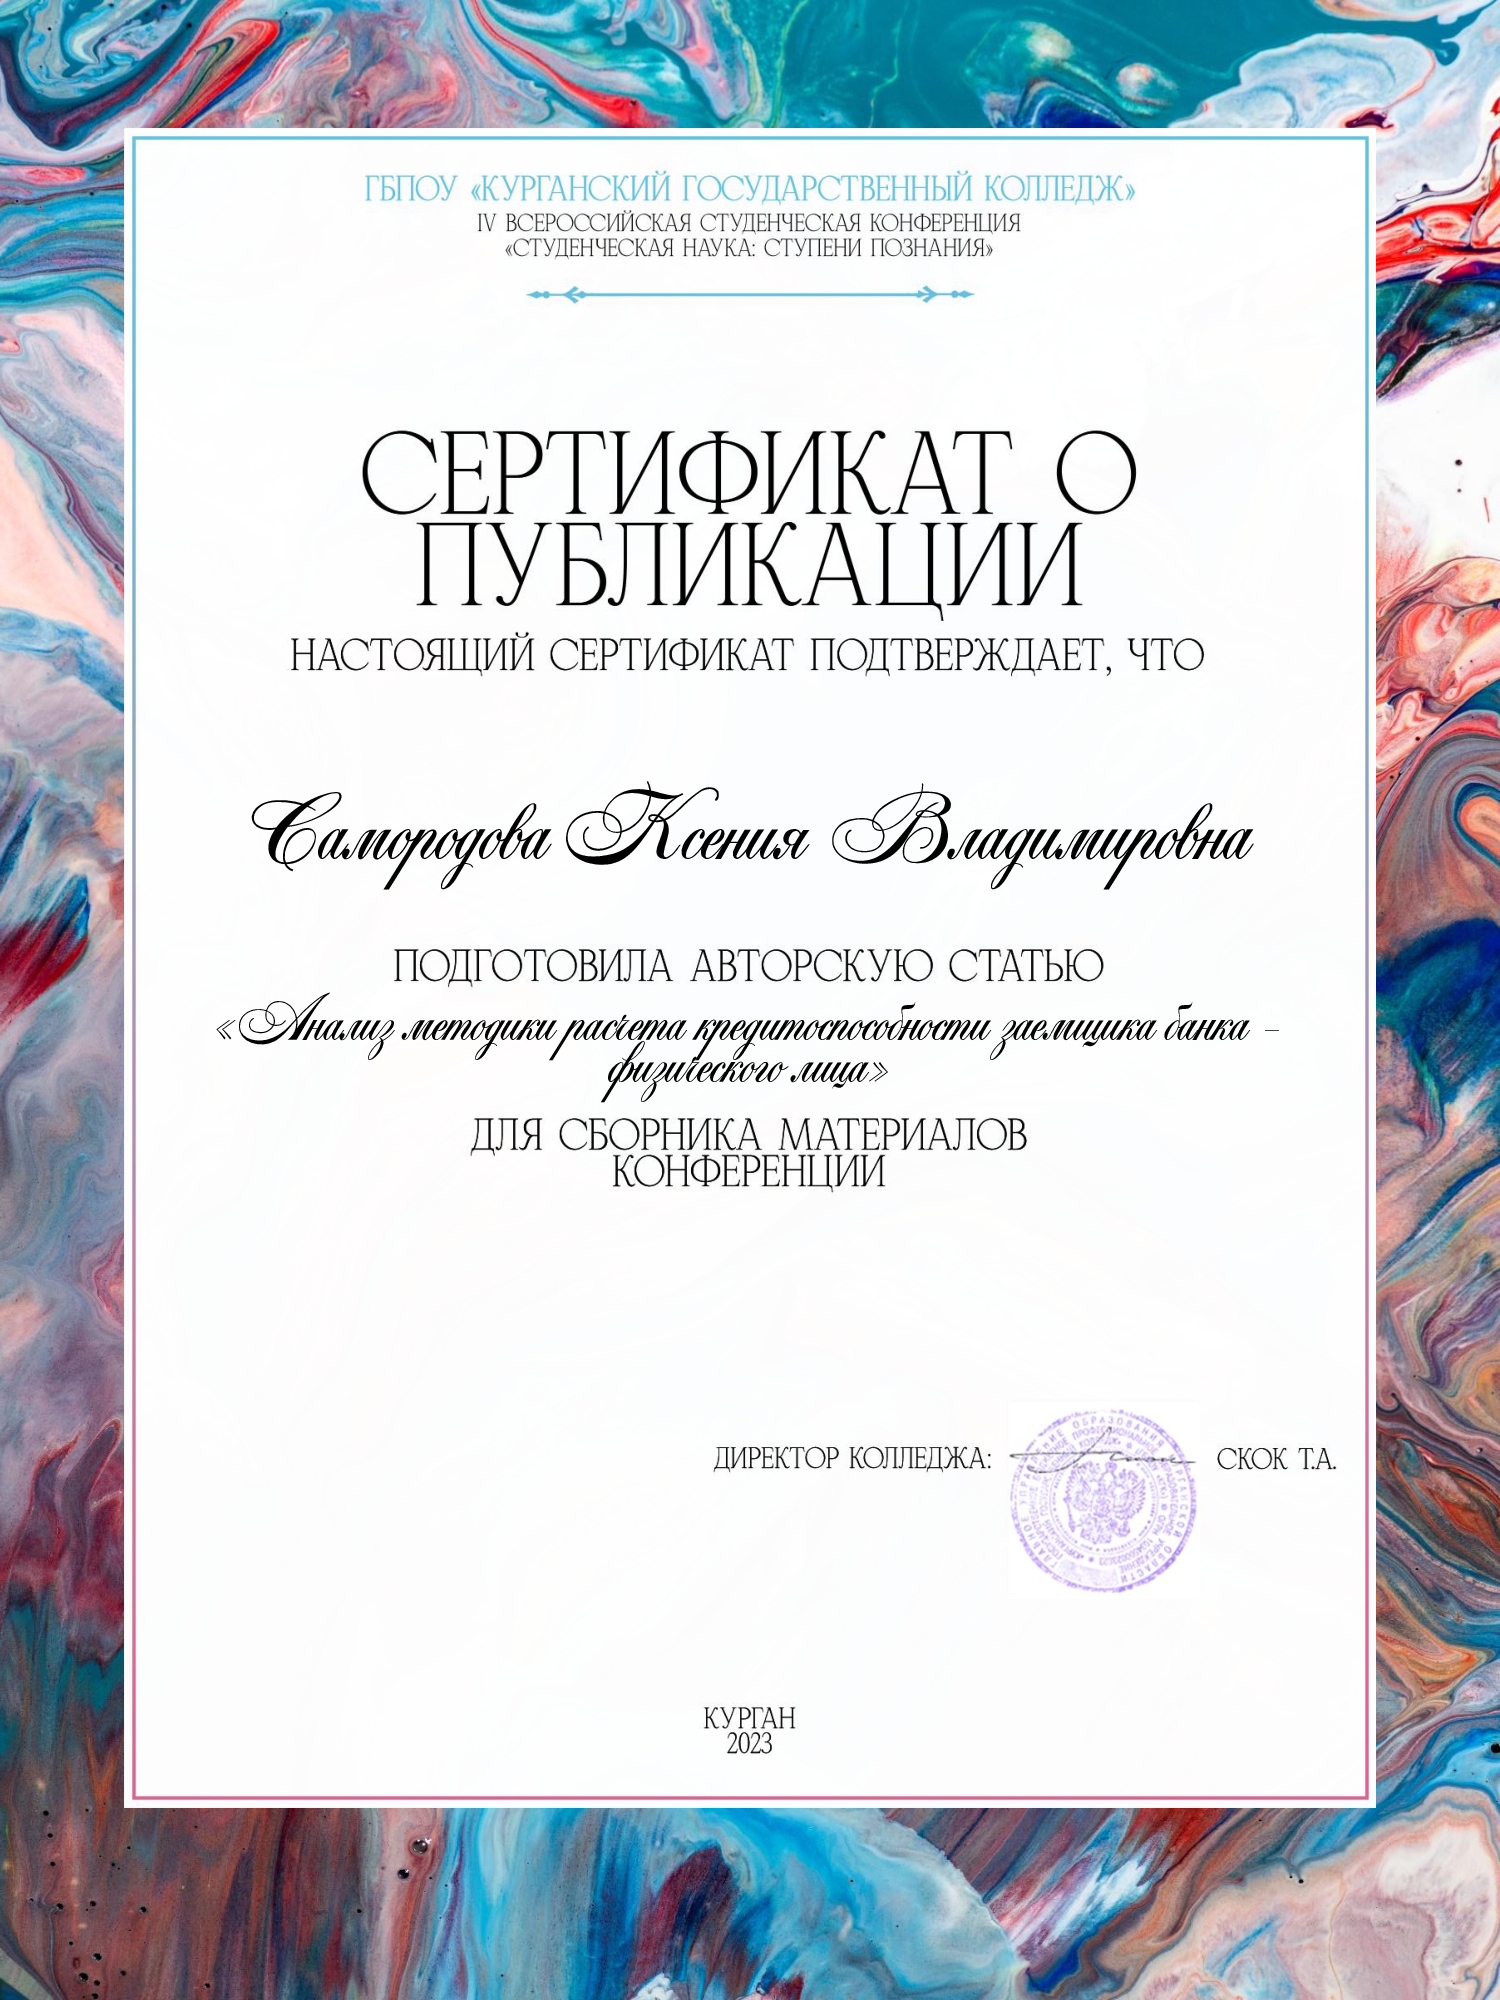 Самородова_Сертификат-о-публикации.jpg